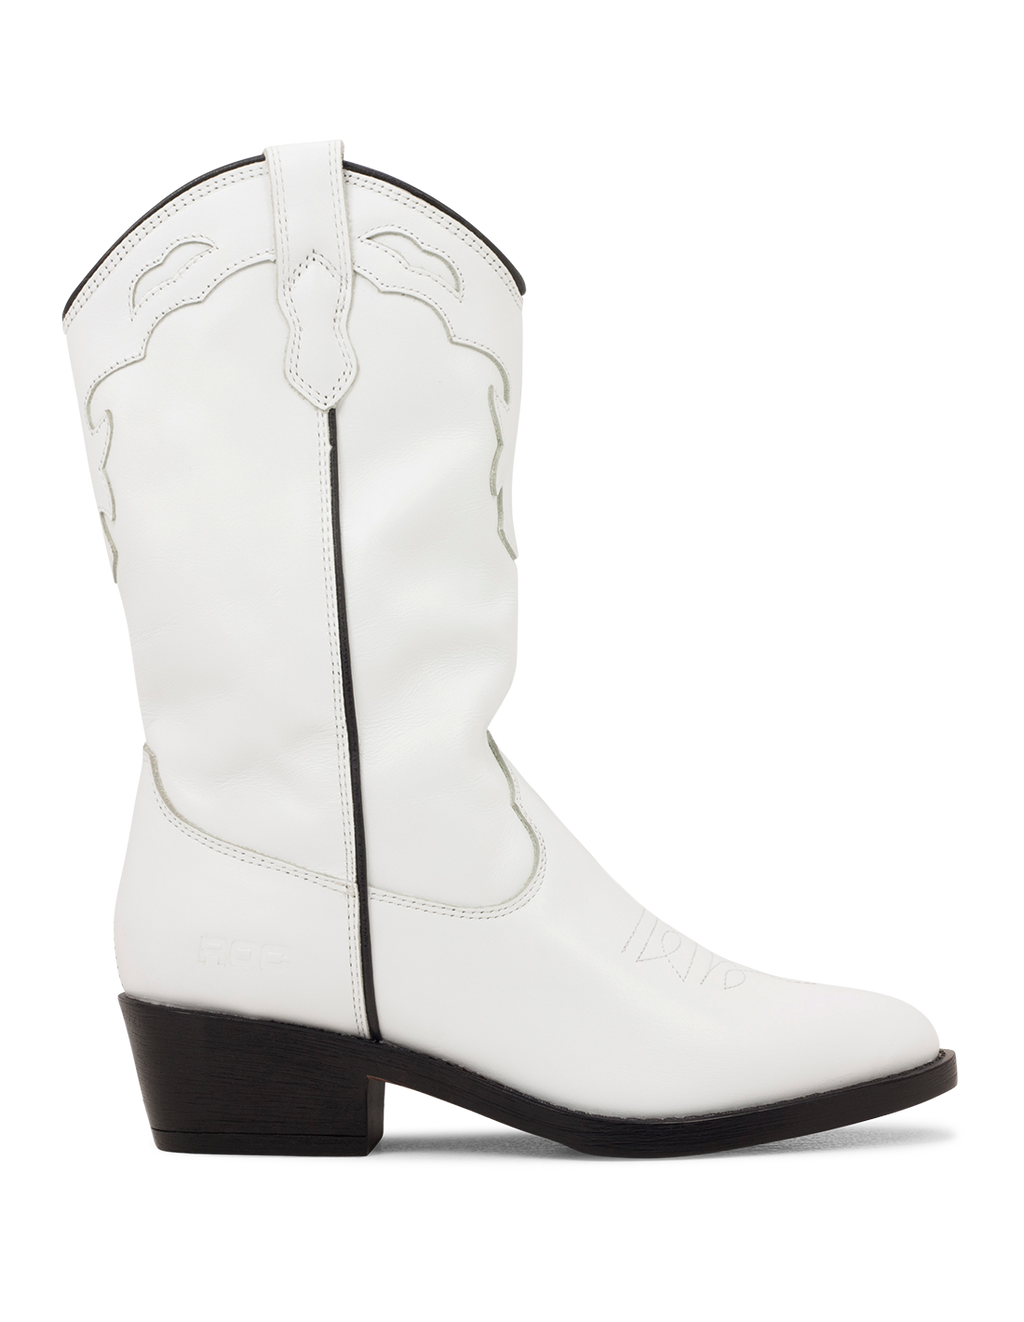 roc white boots